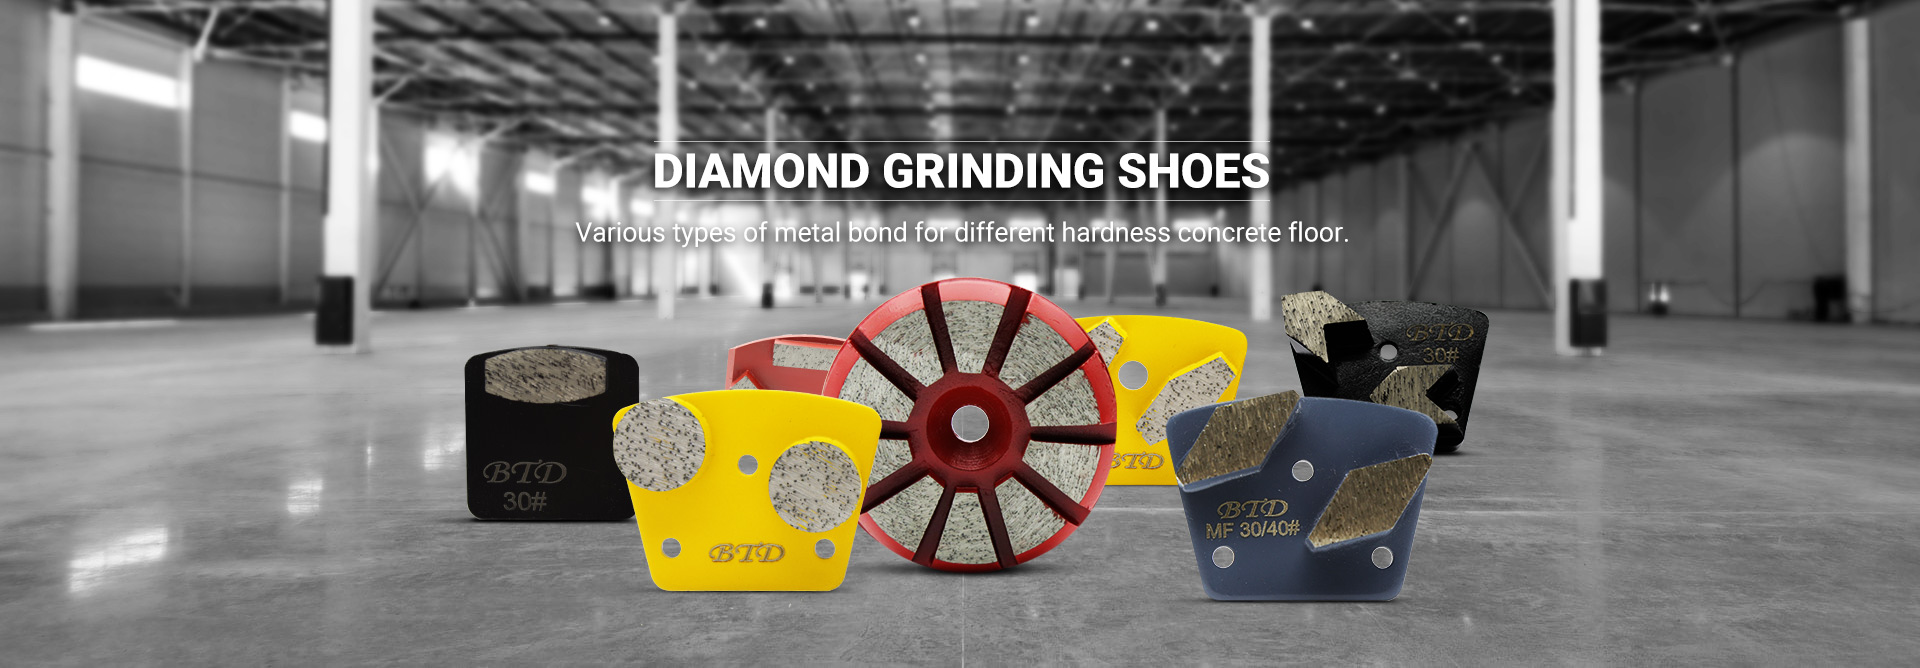 Metal bond diamond grinding shoes for floor grinder